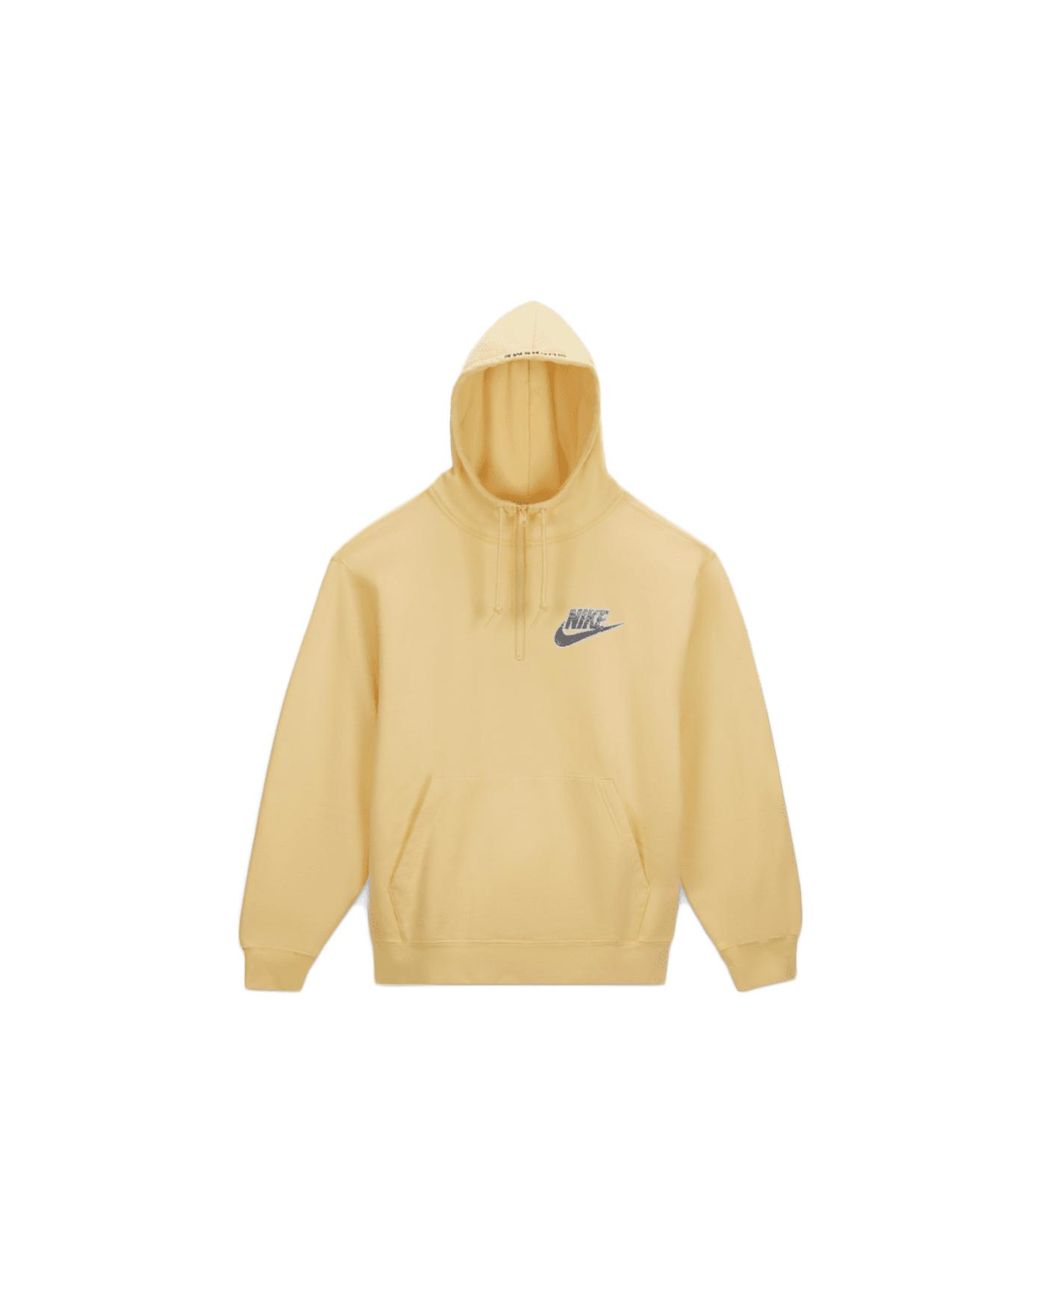 Supreme Nike Half Zip Hooded Sweatshirt in Pale Yellow (Metallic) for ...